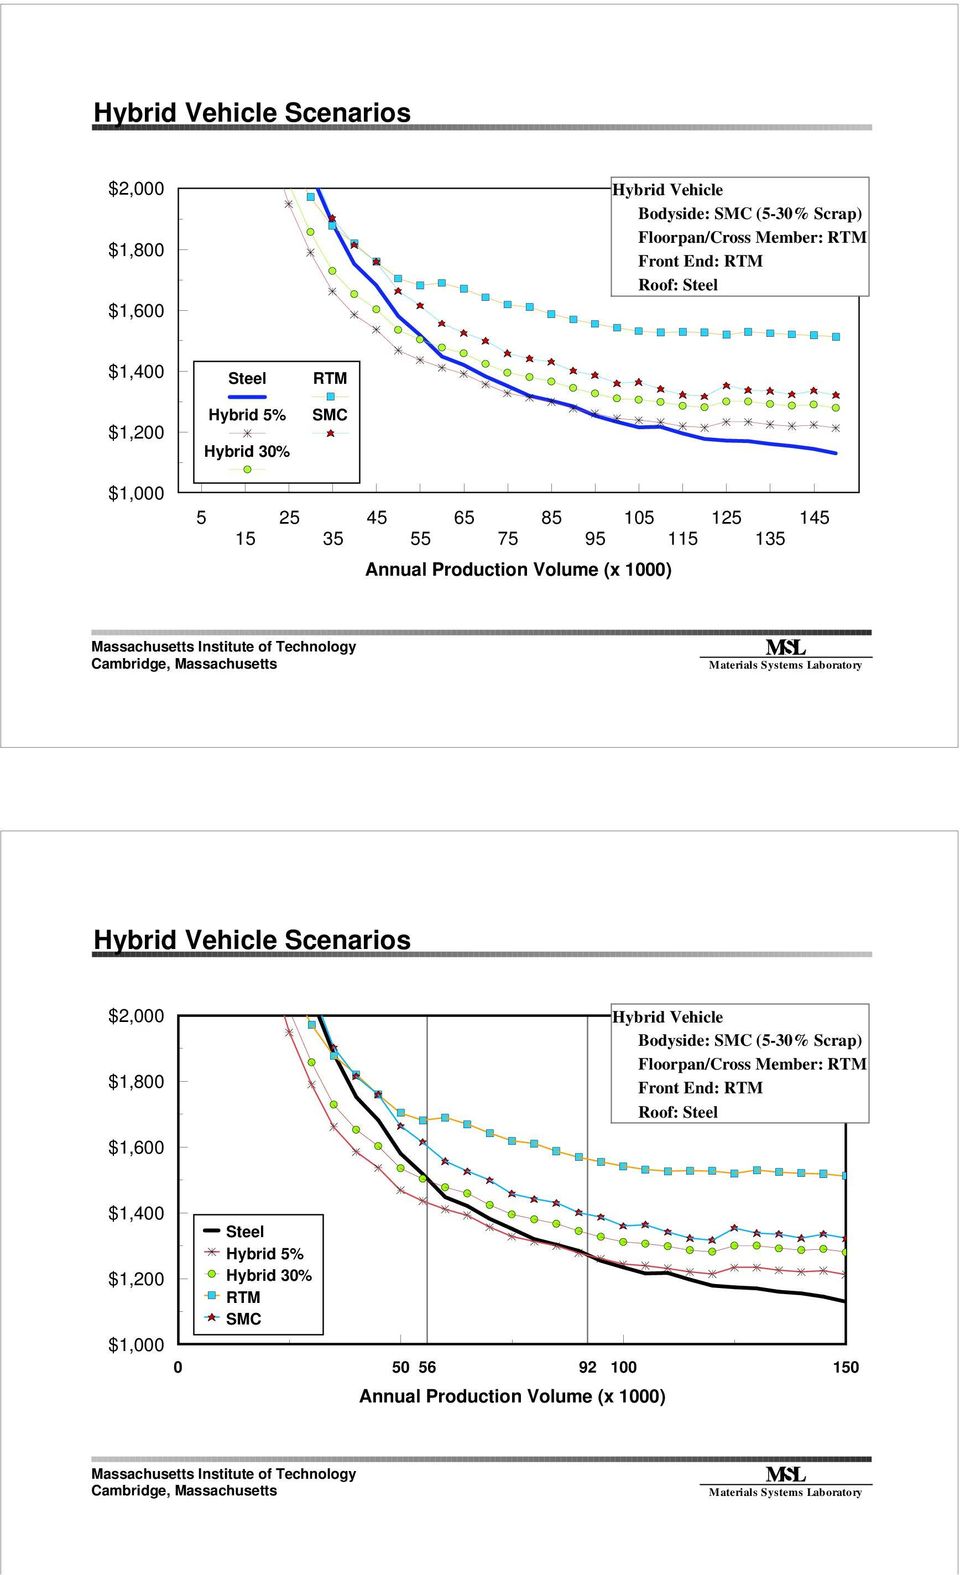 95 105 115 125 135 145 Hybrid Vehicle Scenarios $2,000 $1,800 Hybrid Vehicle Bodyside: (5-30% Scrap)